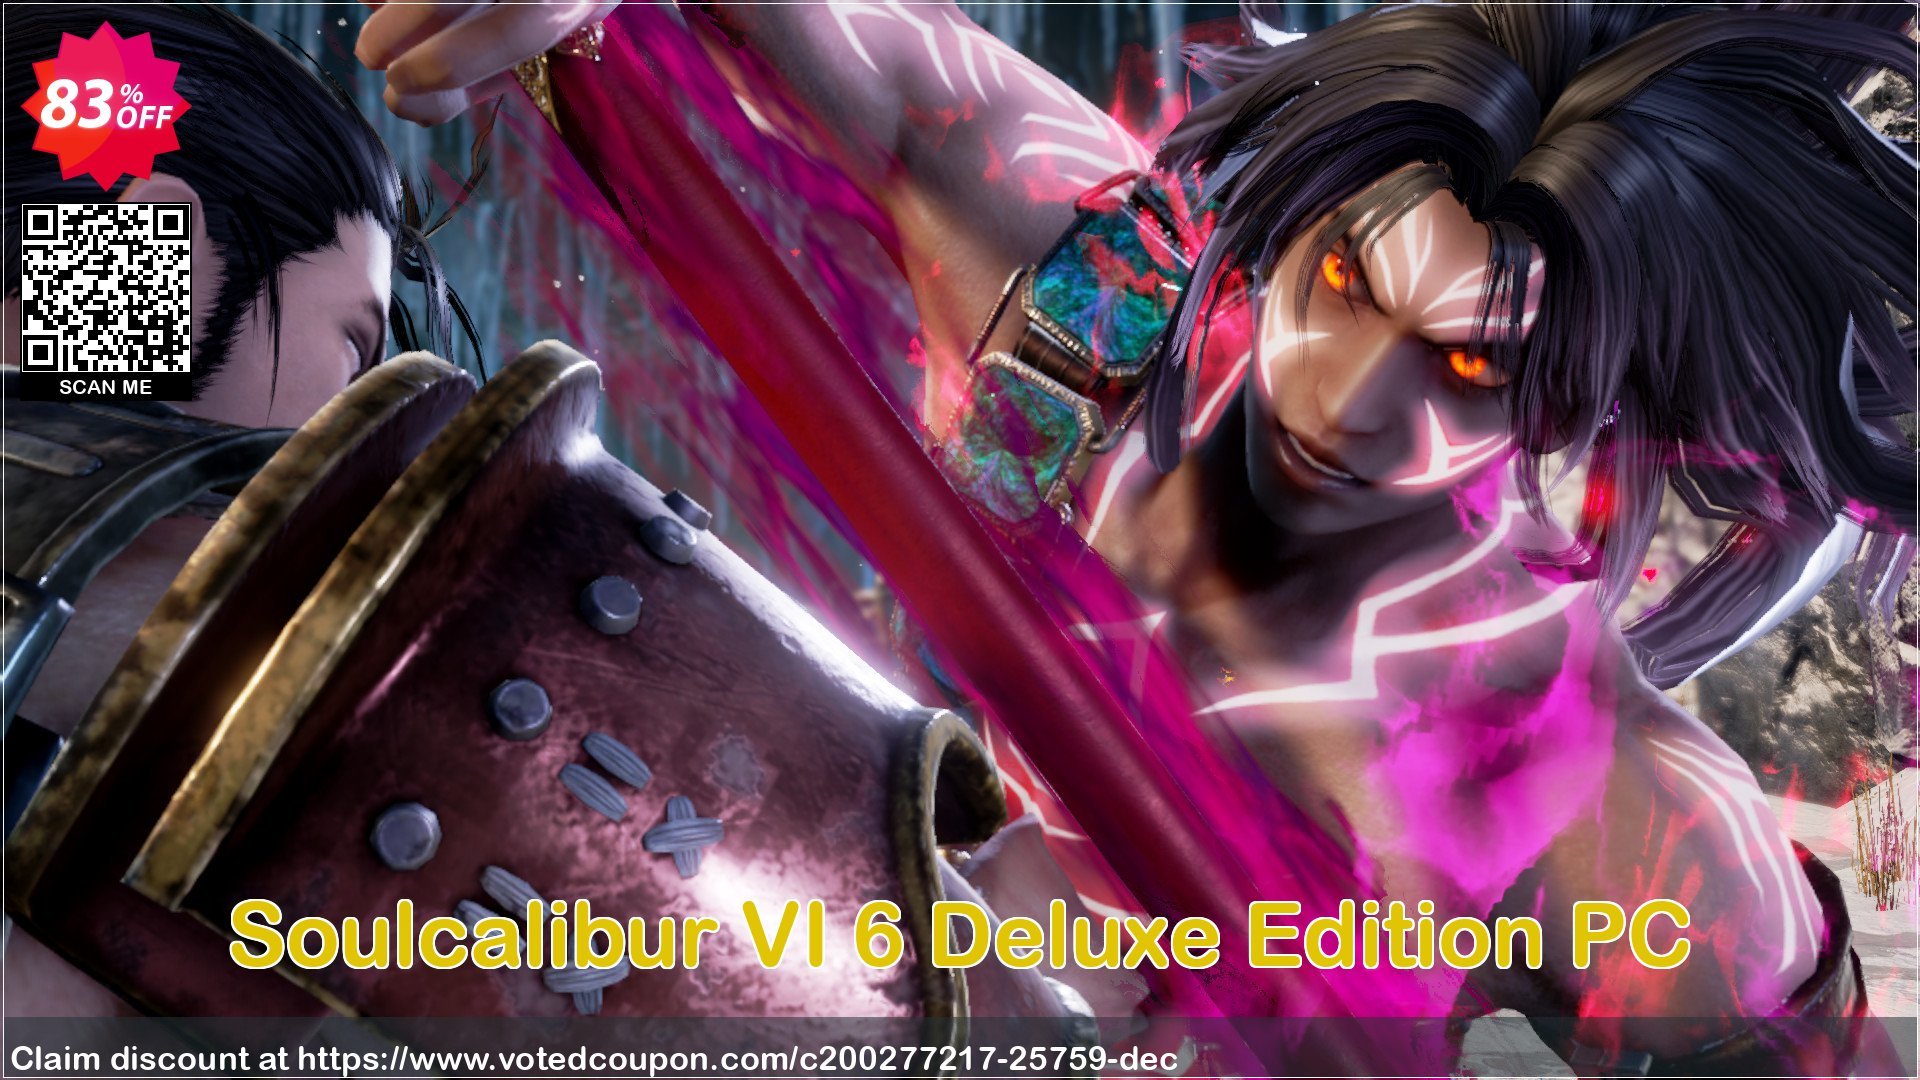 Soulcalibur VI 6 Deluxe Edition PC Coupon Code Apr 2024, 83% OFF - VotedCoupon